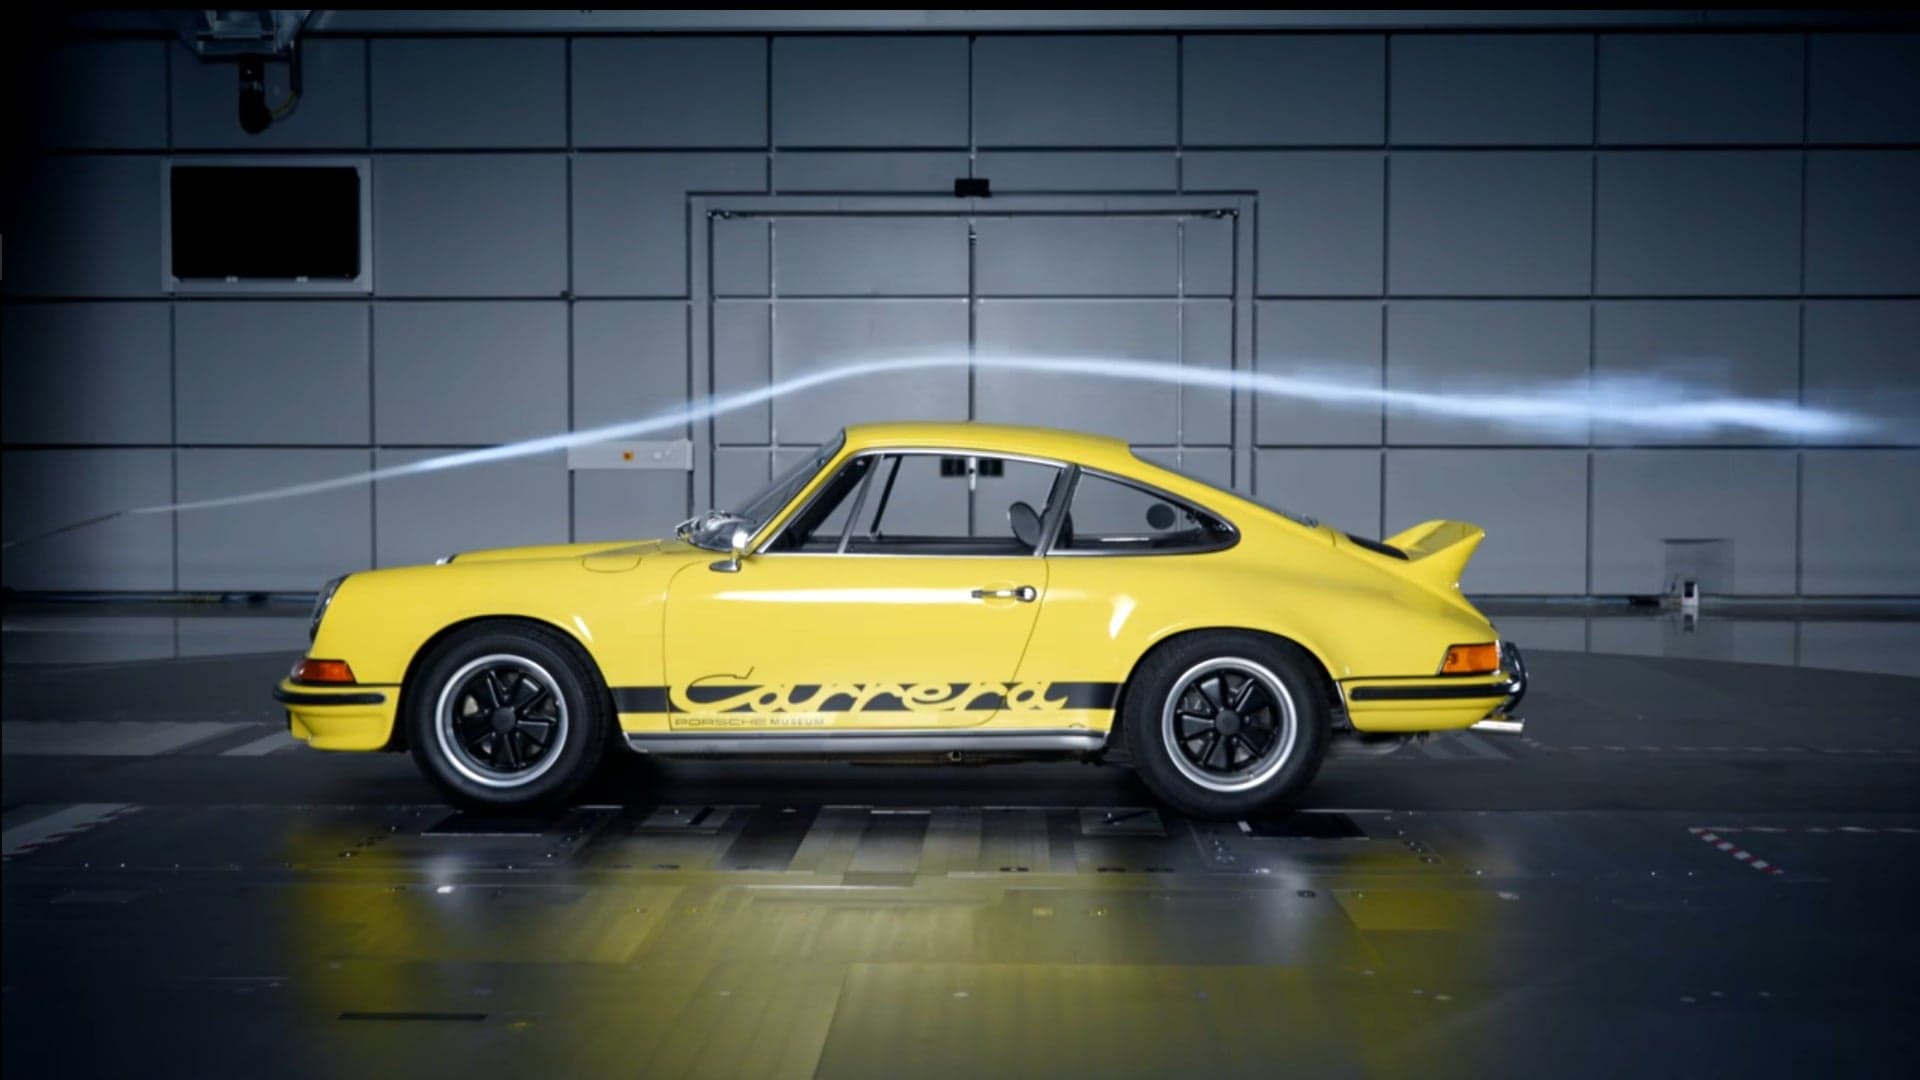 Porsche’s Top Five “Wildest” Rear Spoilers And Wings